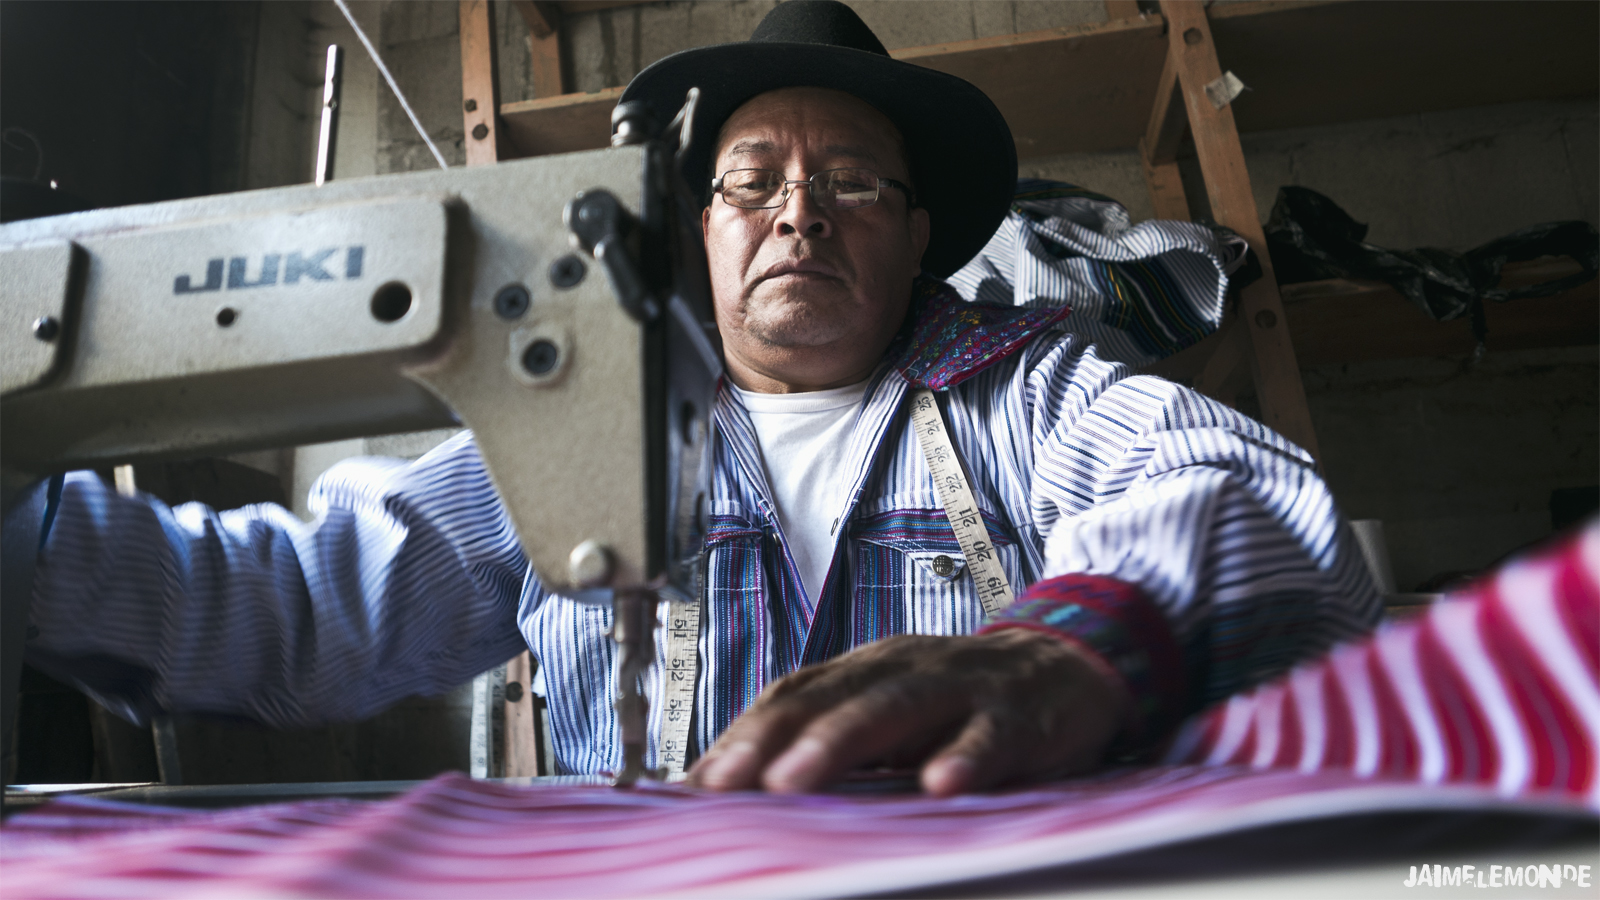 Basilio le tailleur de Todos Santos Cuchumatán au Guatemala - ©jaimelemonde.fr